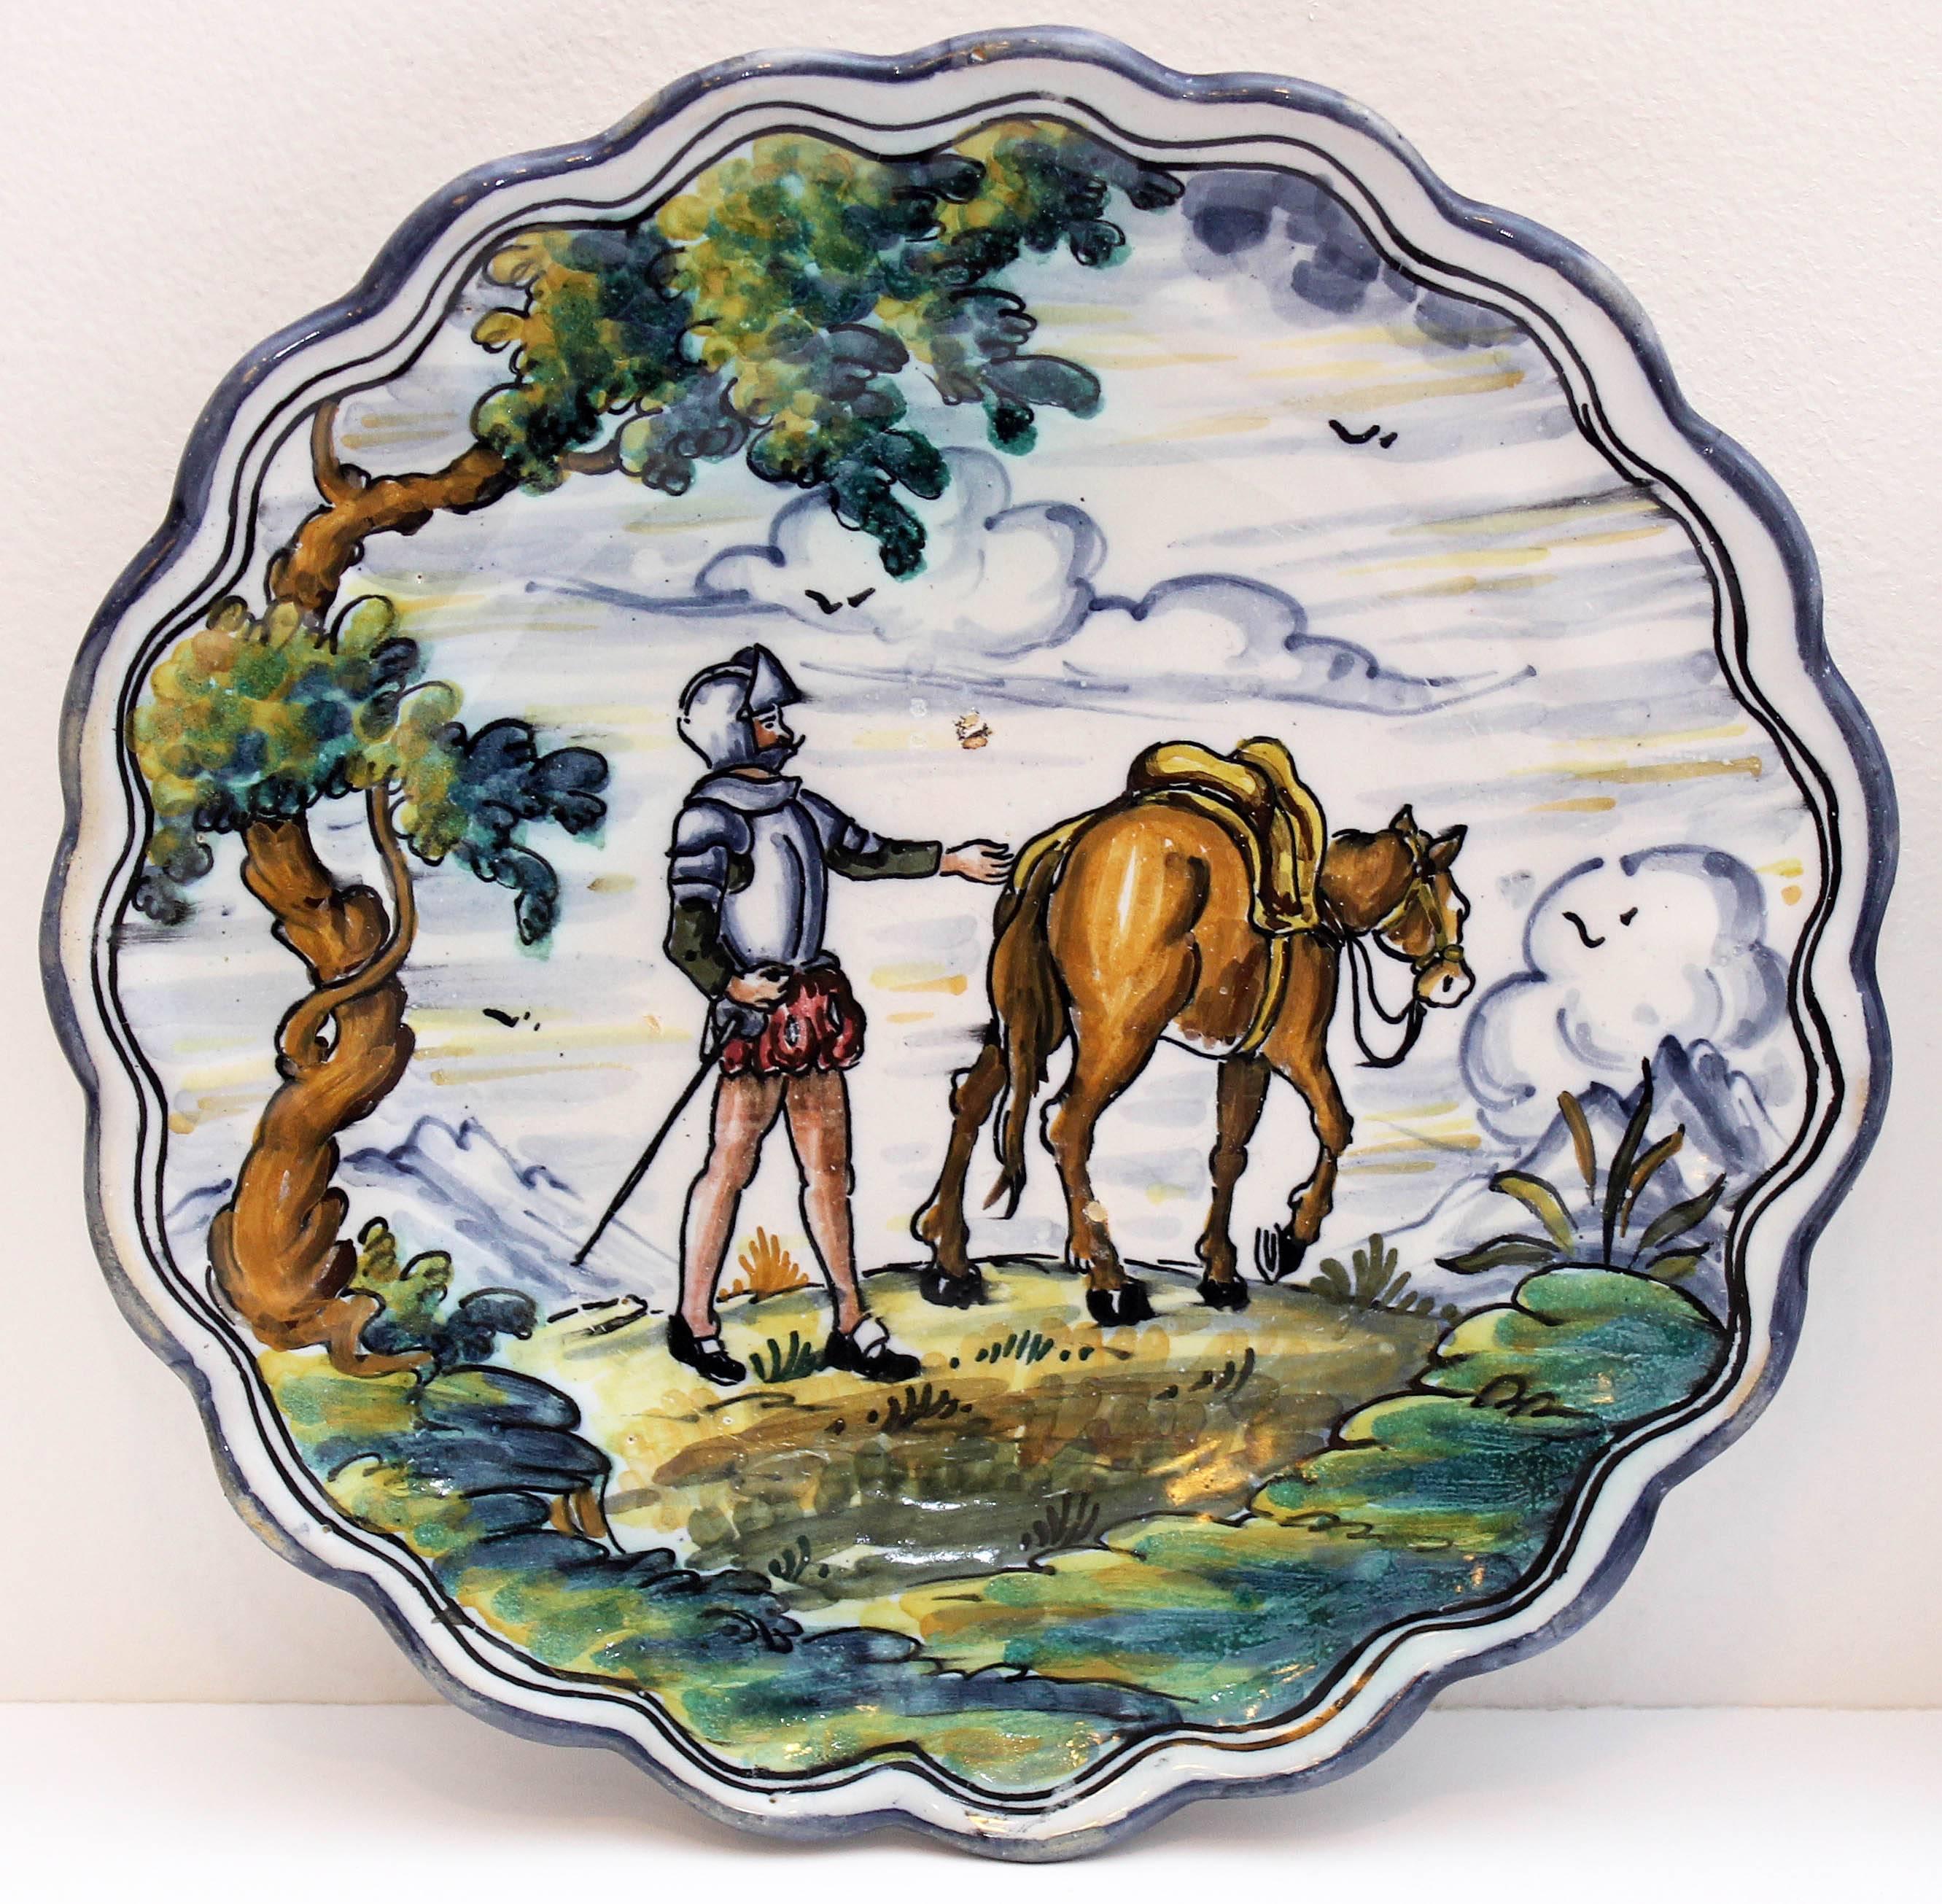 Romantic Eight Talavera Majolica Plates Depicting Don Quixote and Sancho Panza